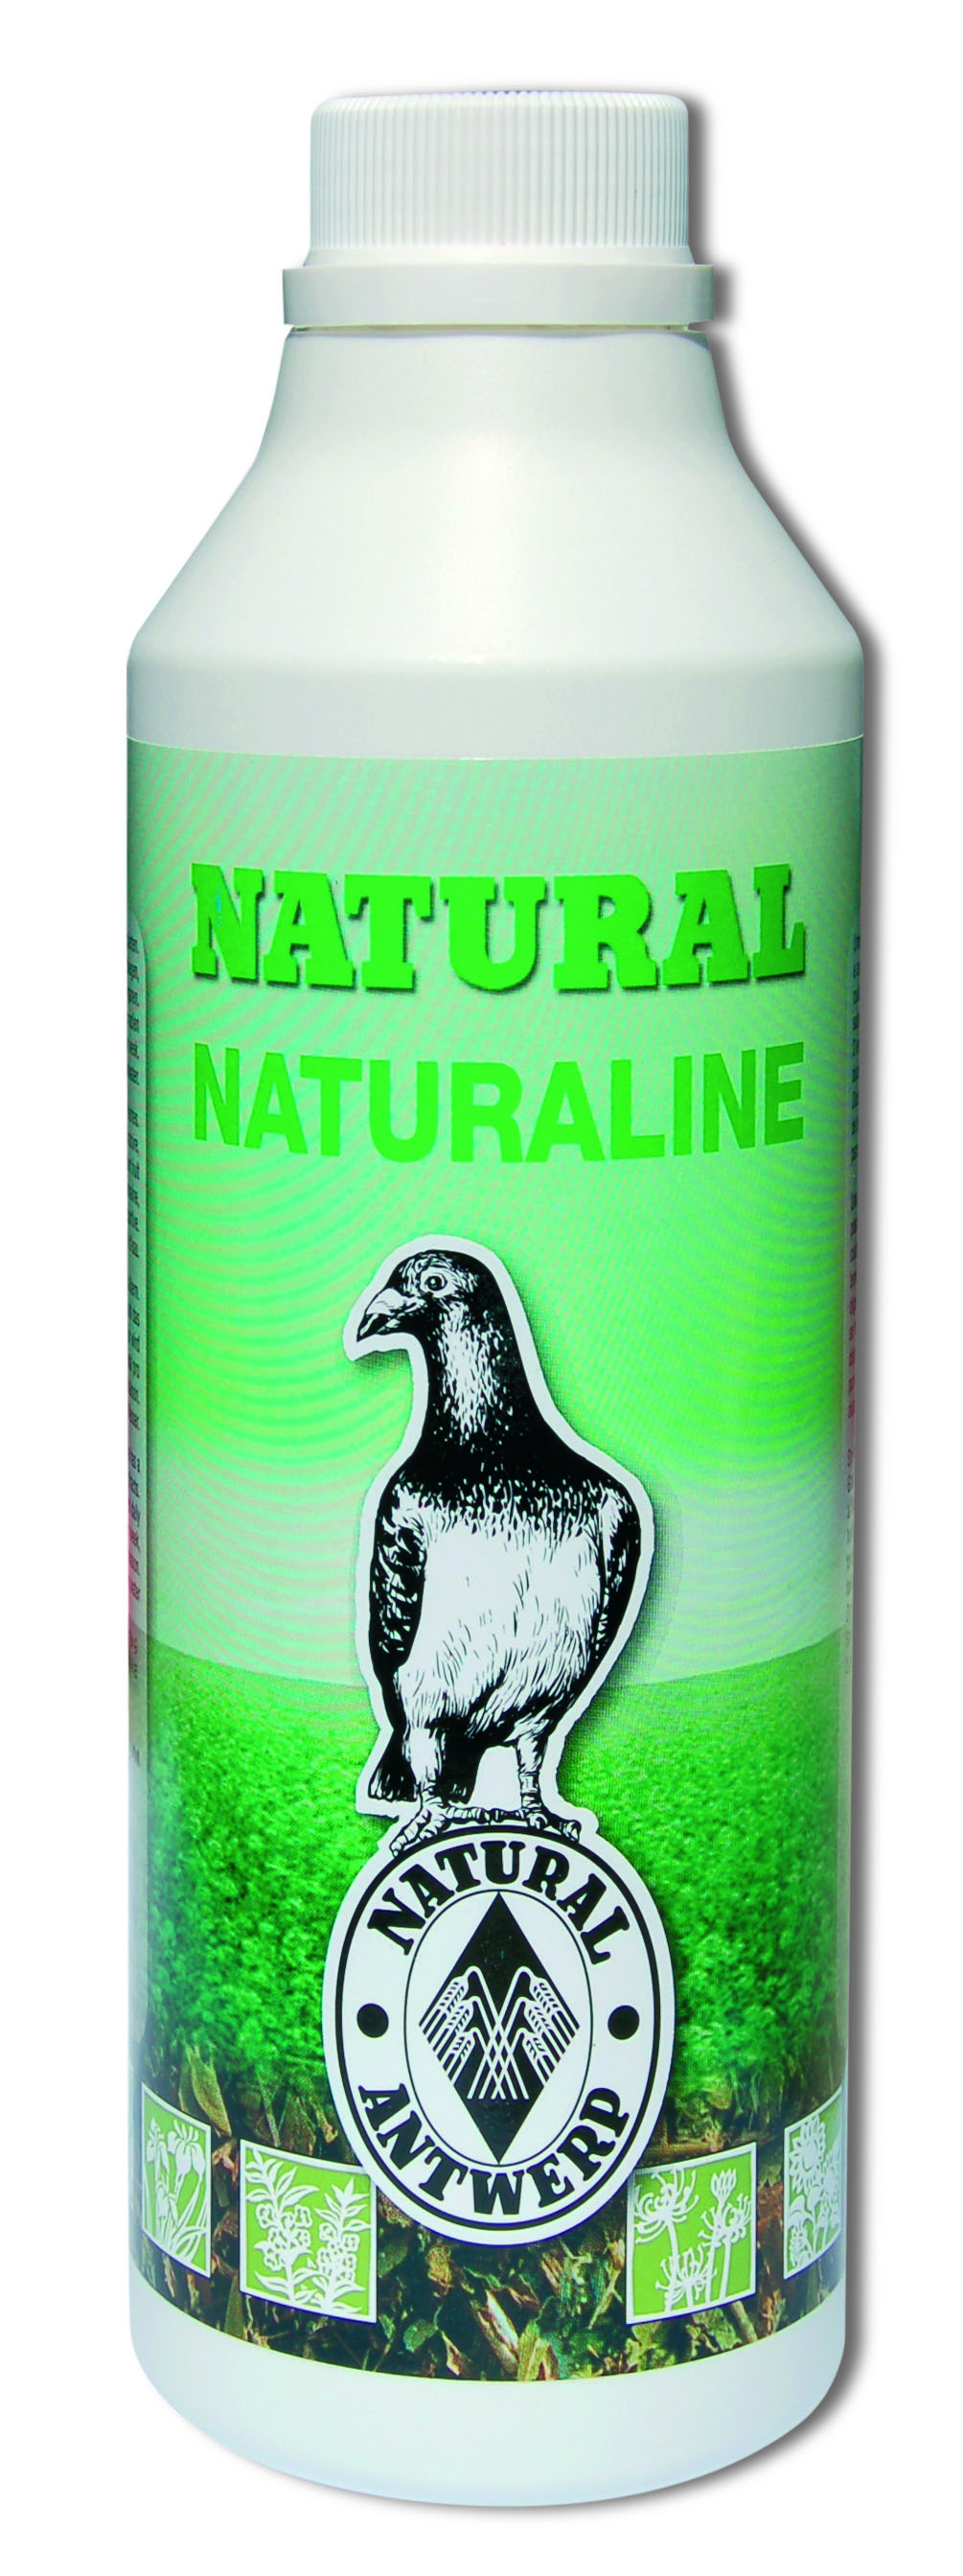 Natural naturaline a6 k6 p684 - Product shot